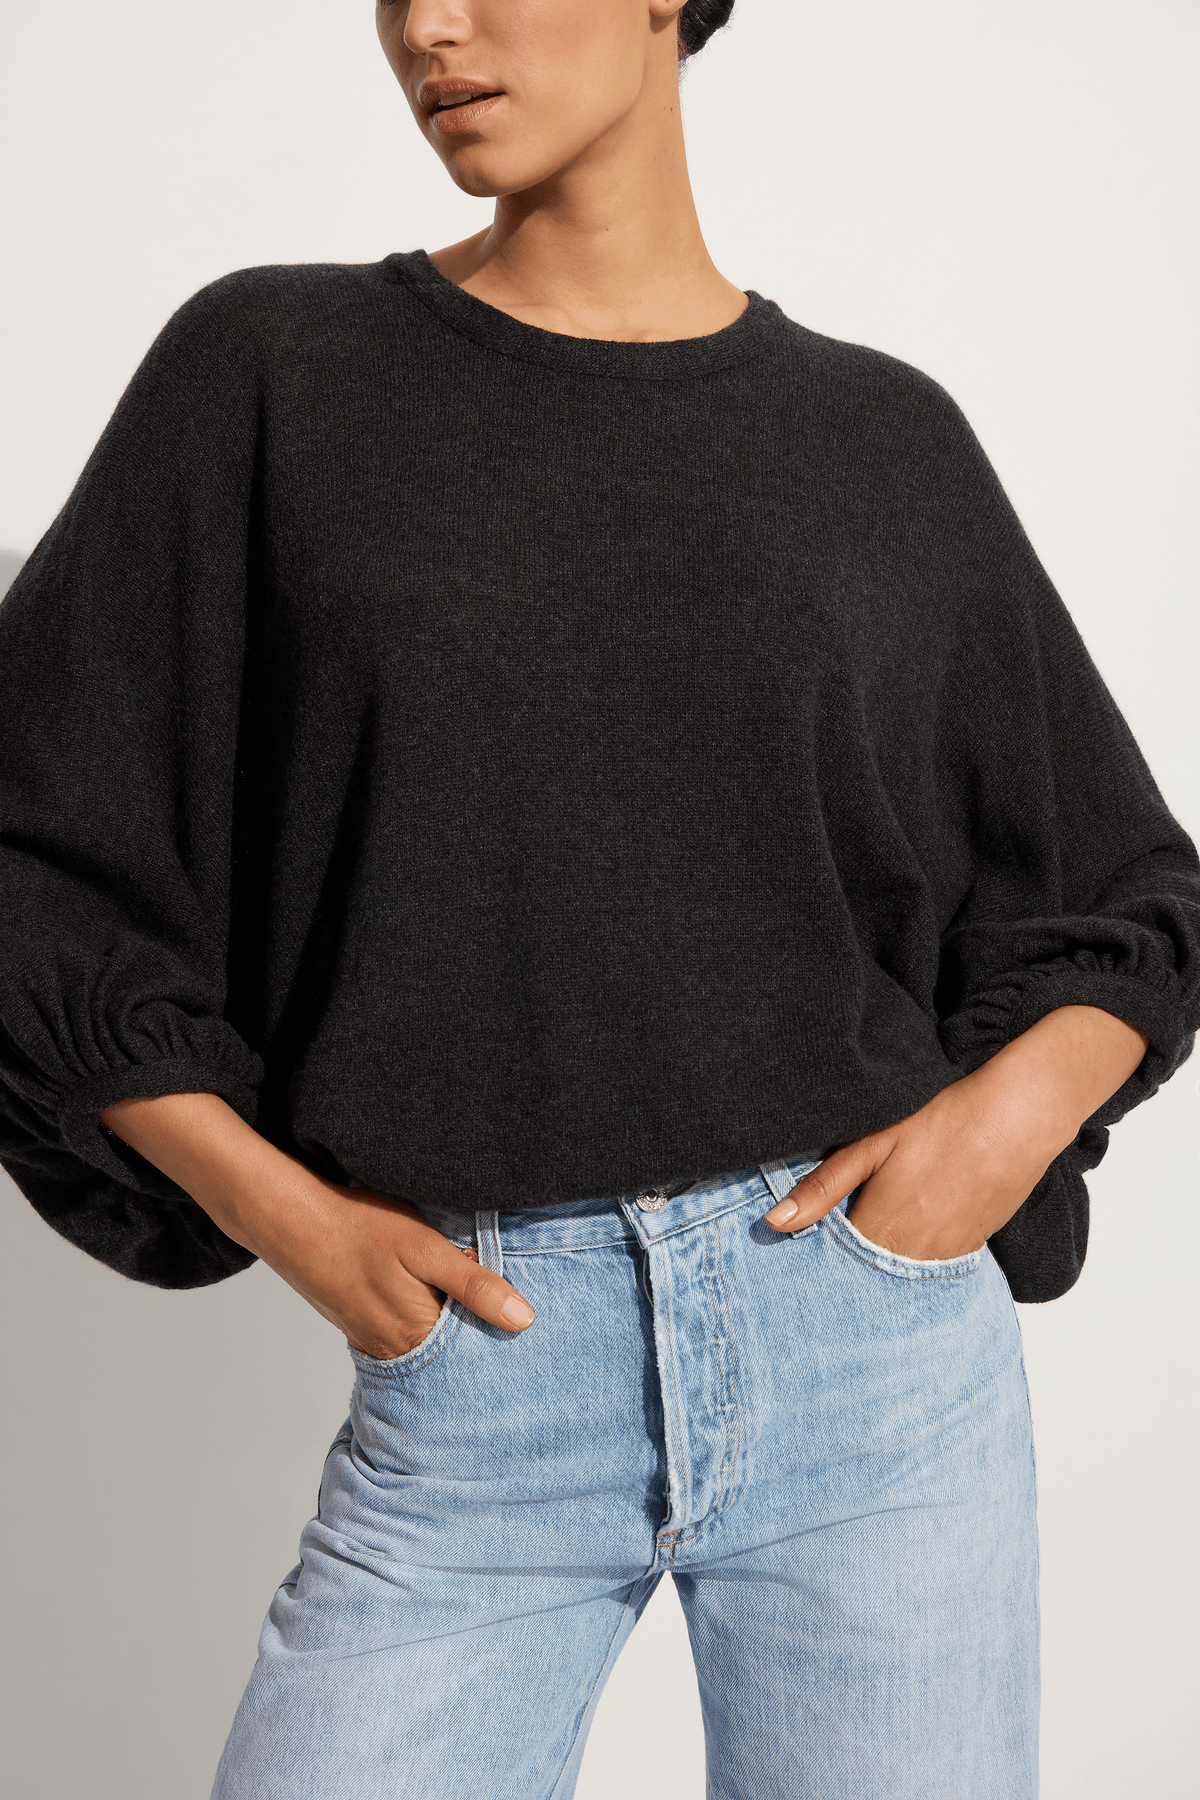 Elsa Esturgie Jour sweater